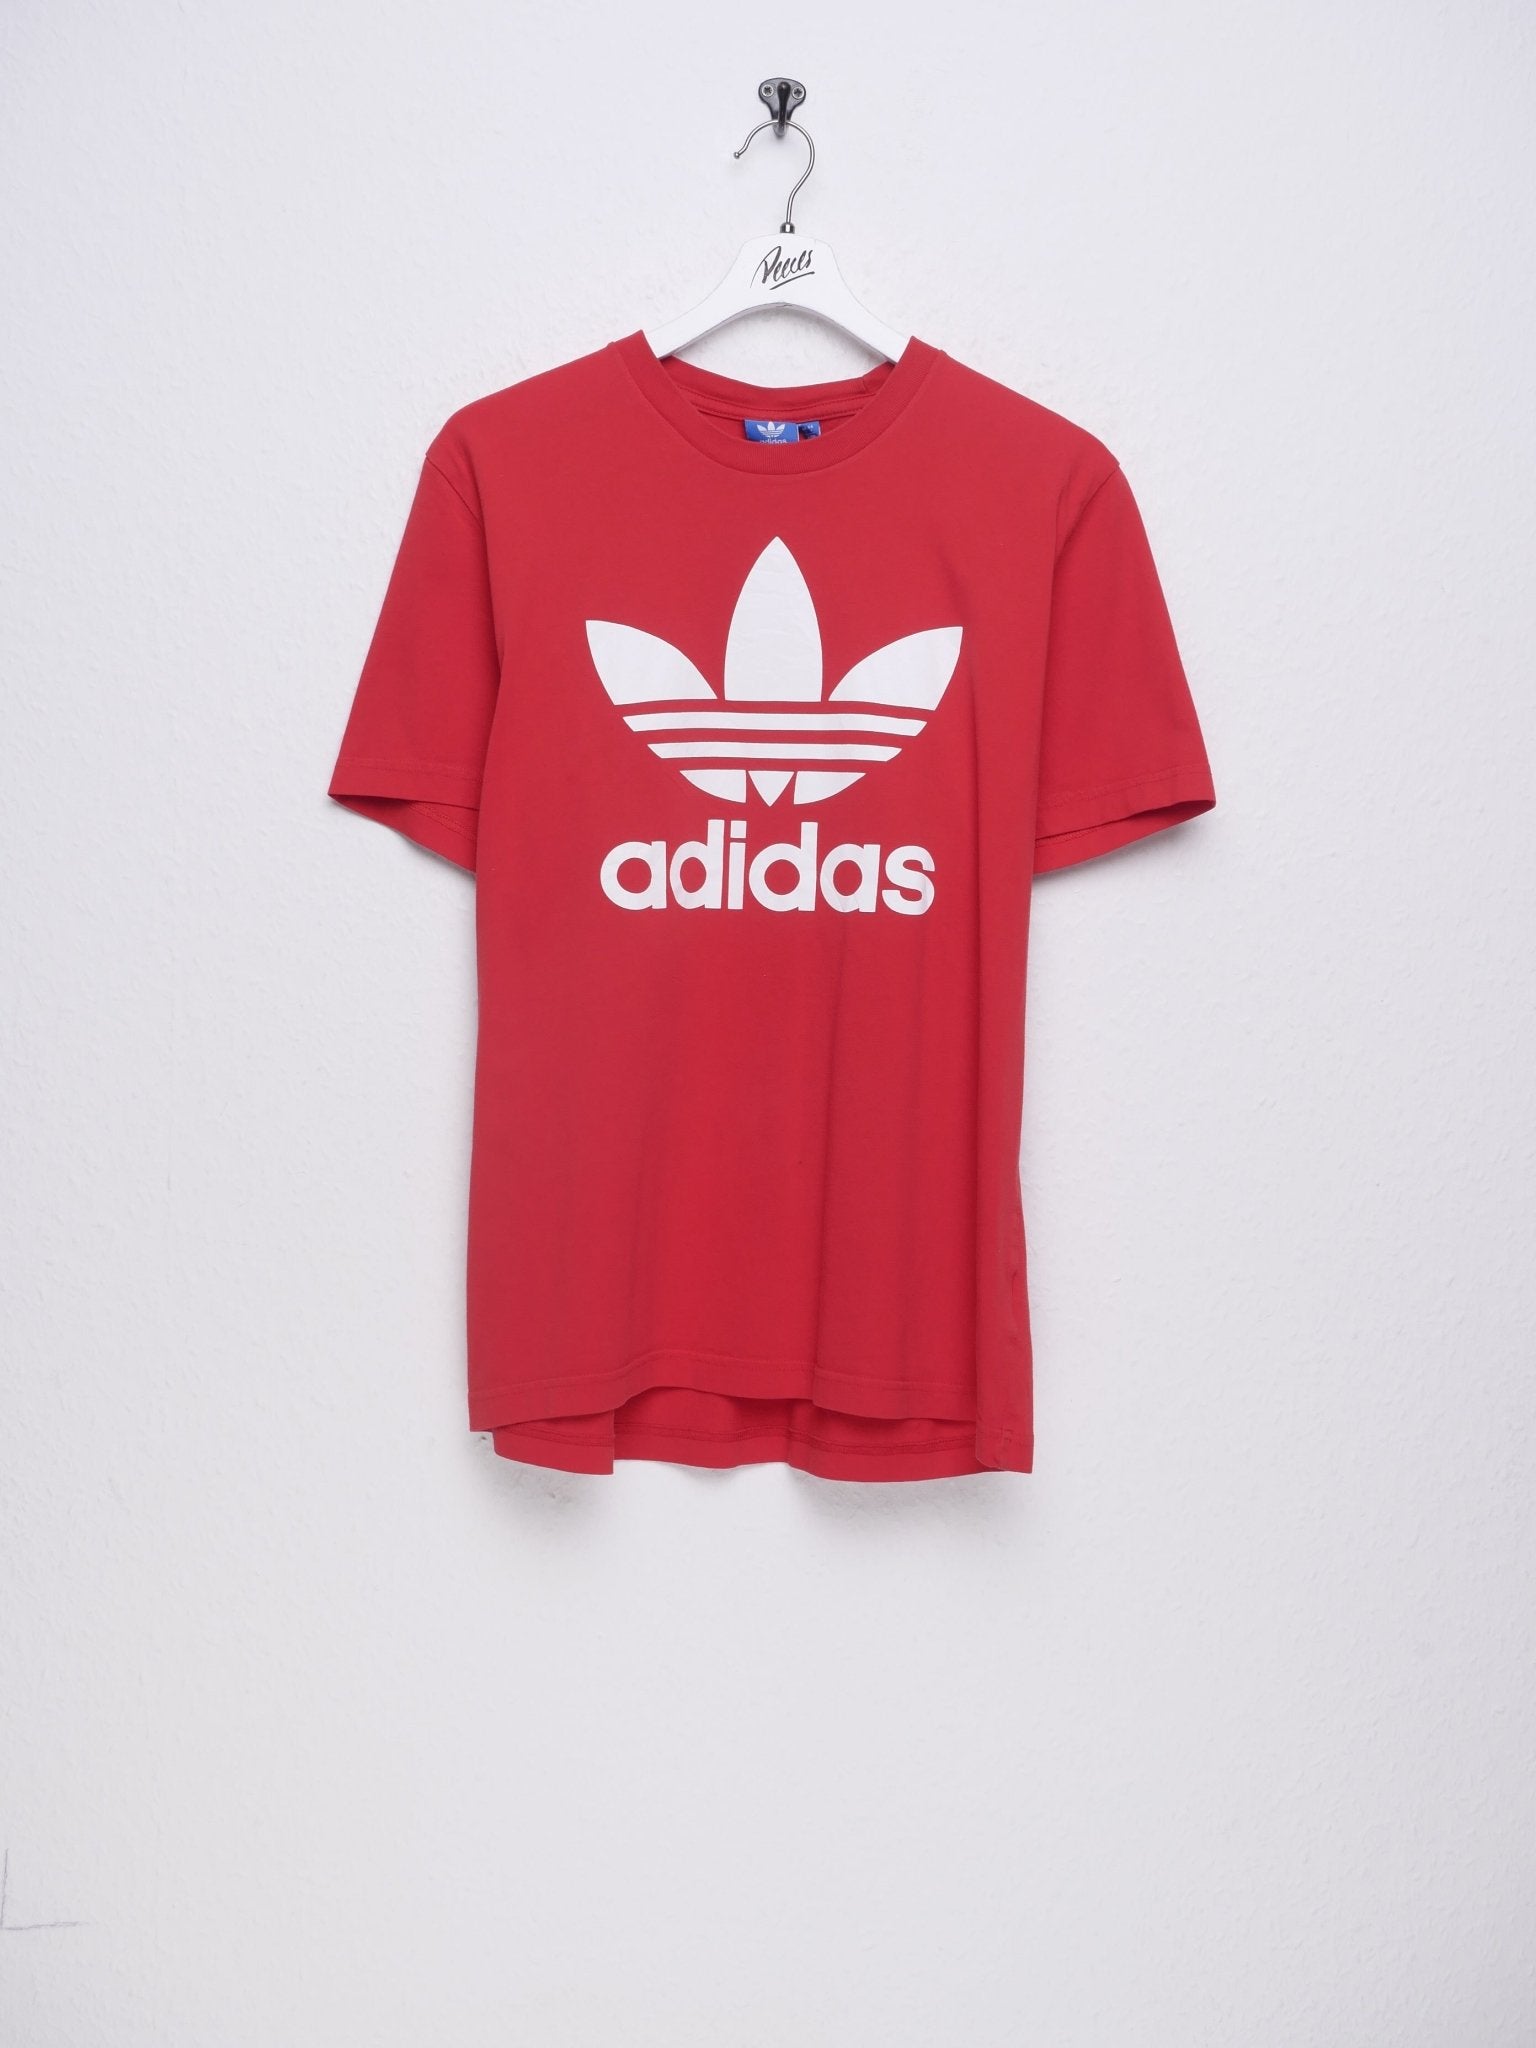 Adidas printed Logo Shirt - Peeces